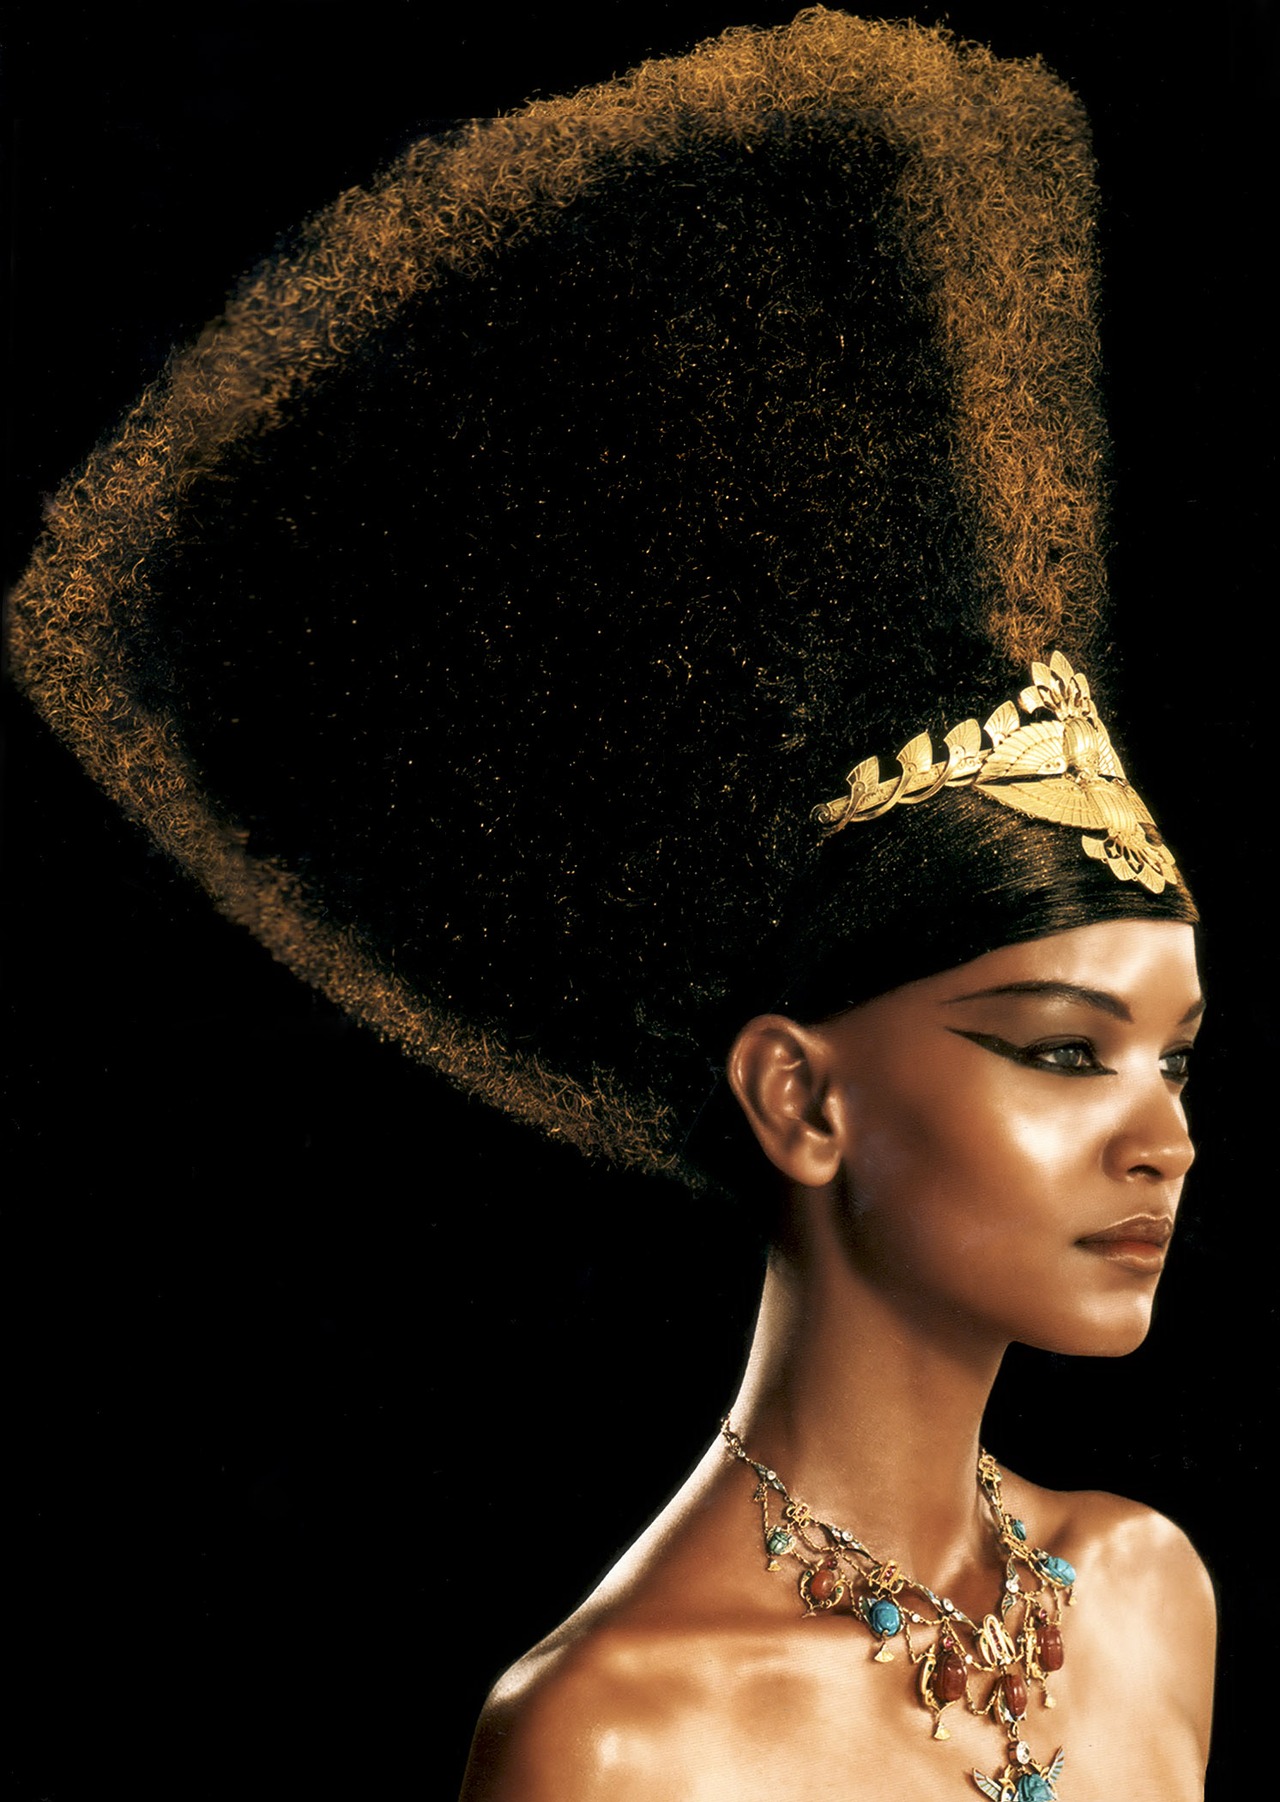 Cleopatra VII (69-30 B.C.) Beautiful Black Queens of Kemet.